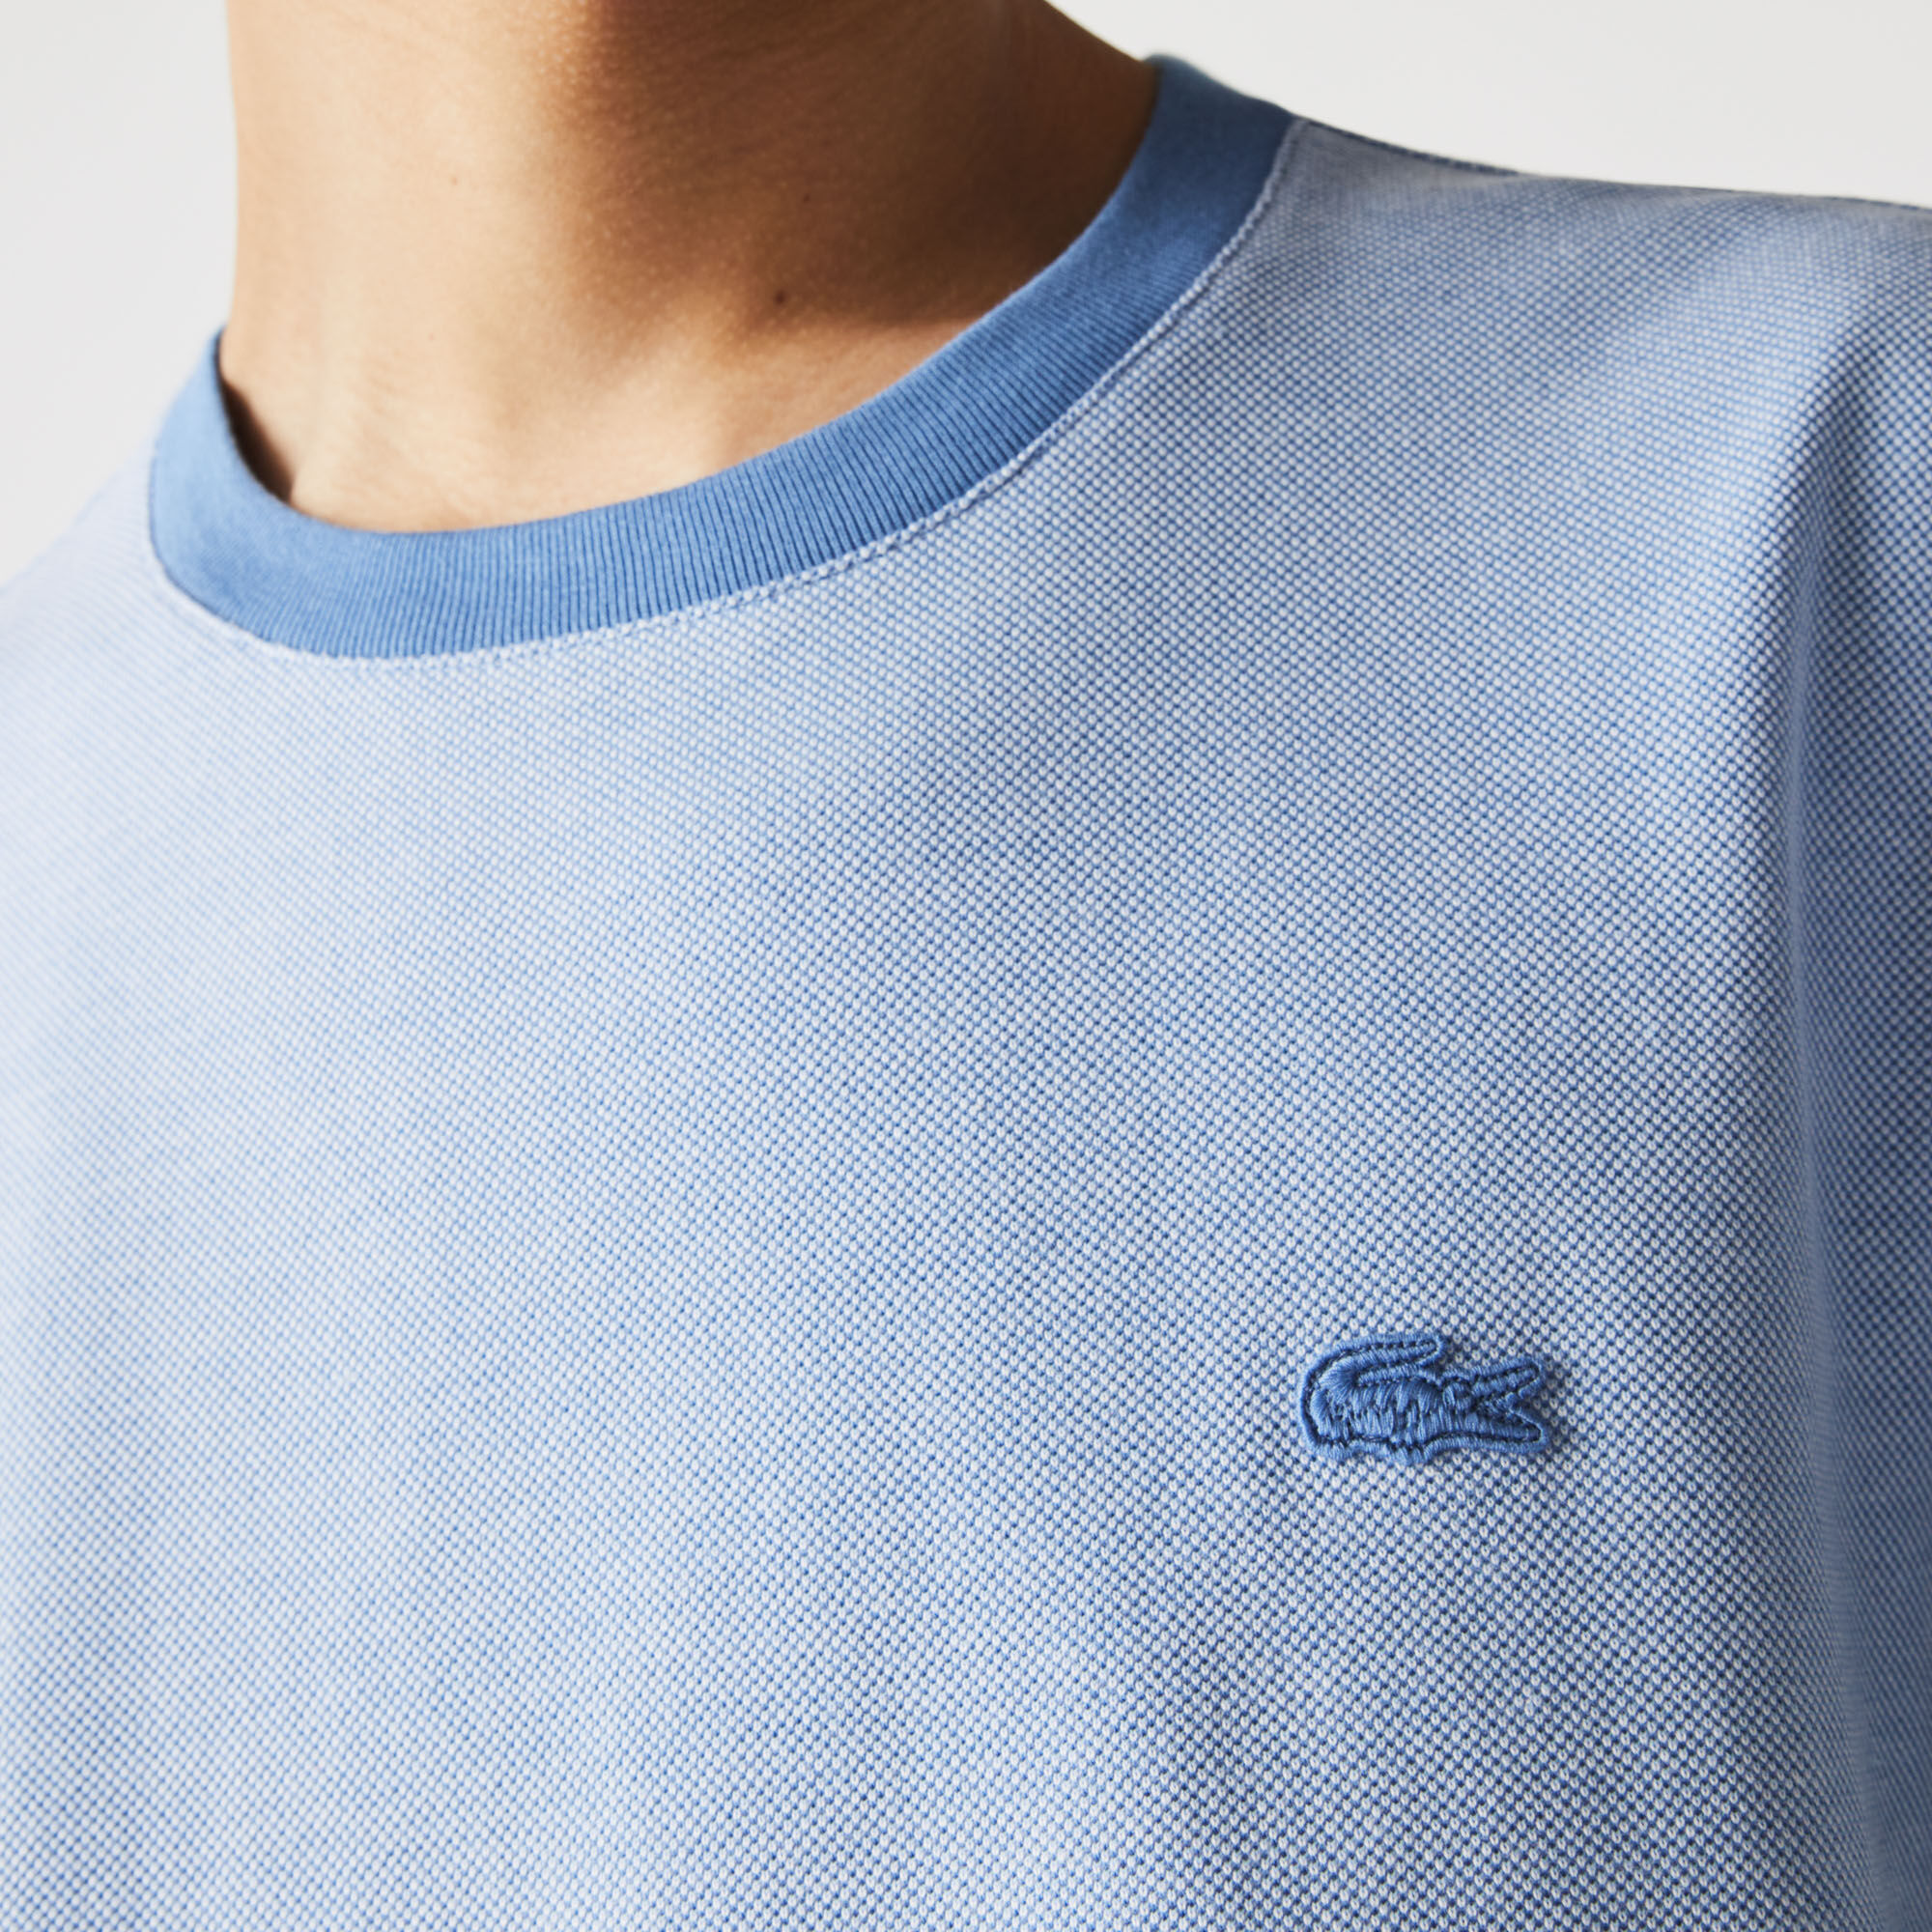 Men’s Crew Neck Textured Cotton T-shirt